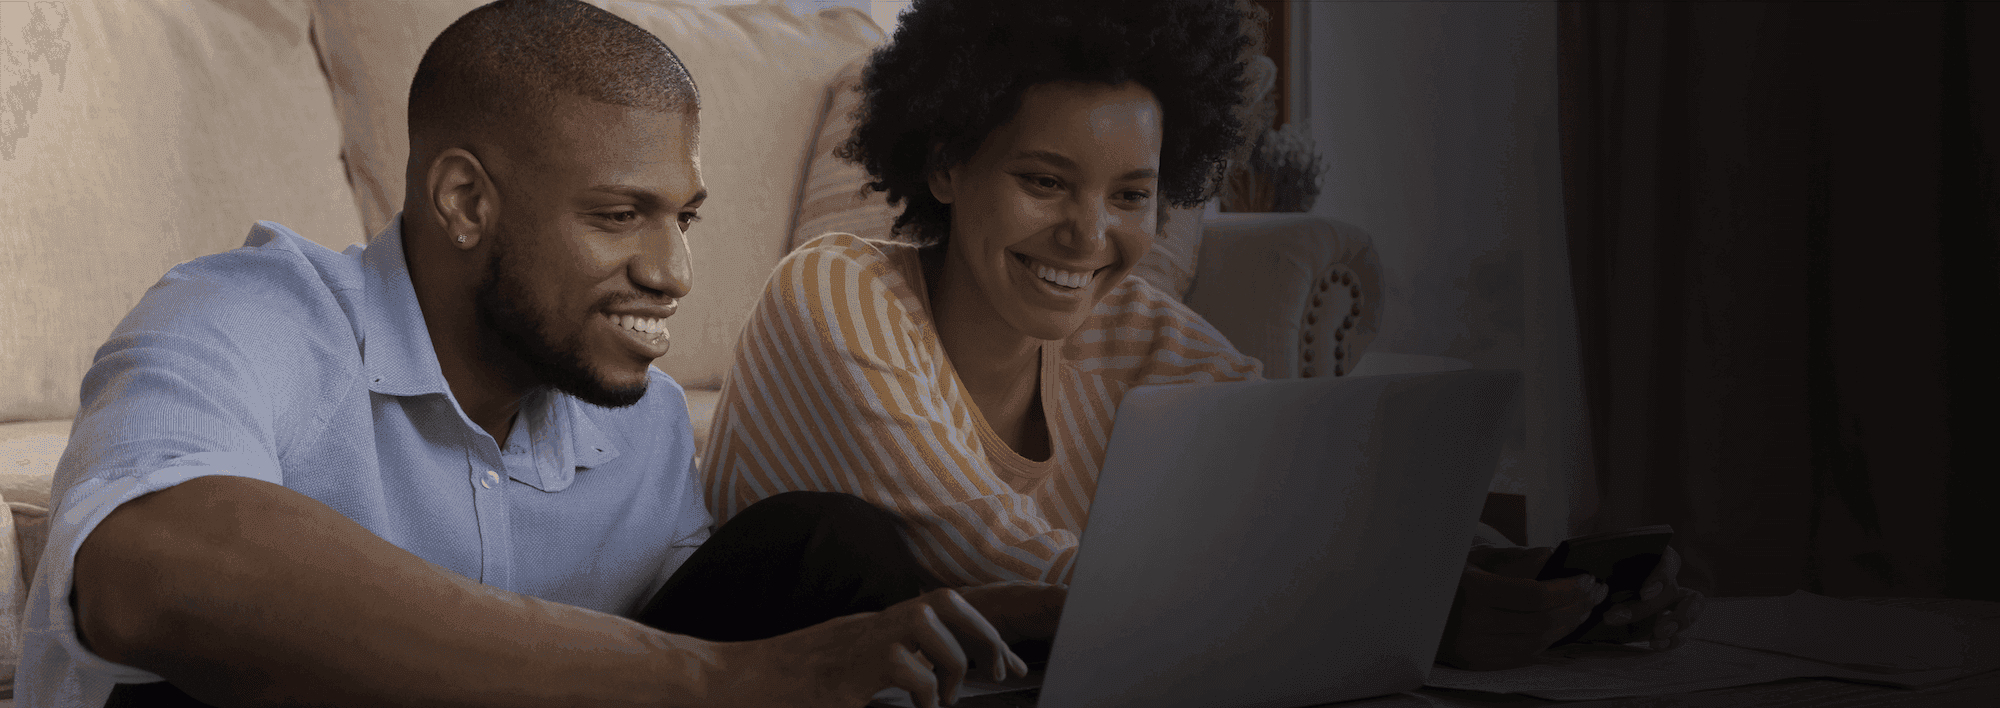 https://strapi.phoenix.eduman and woman looking at laptop smiling